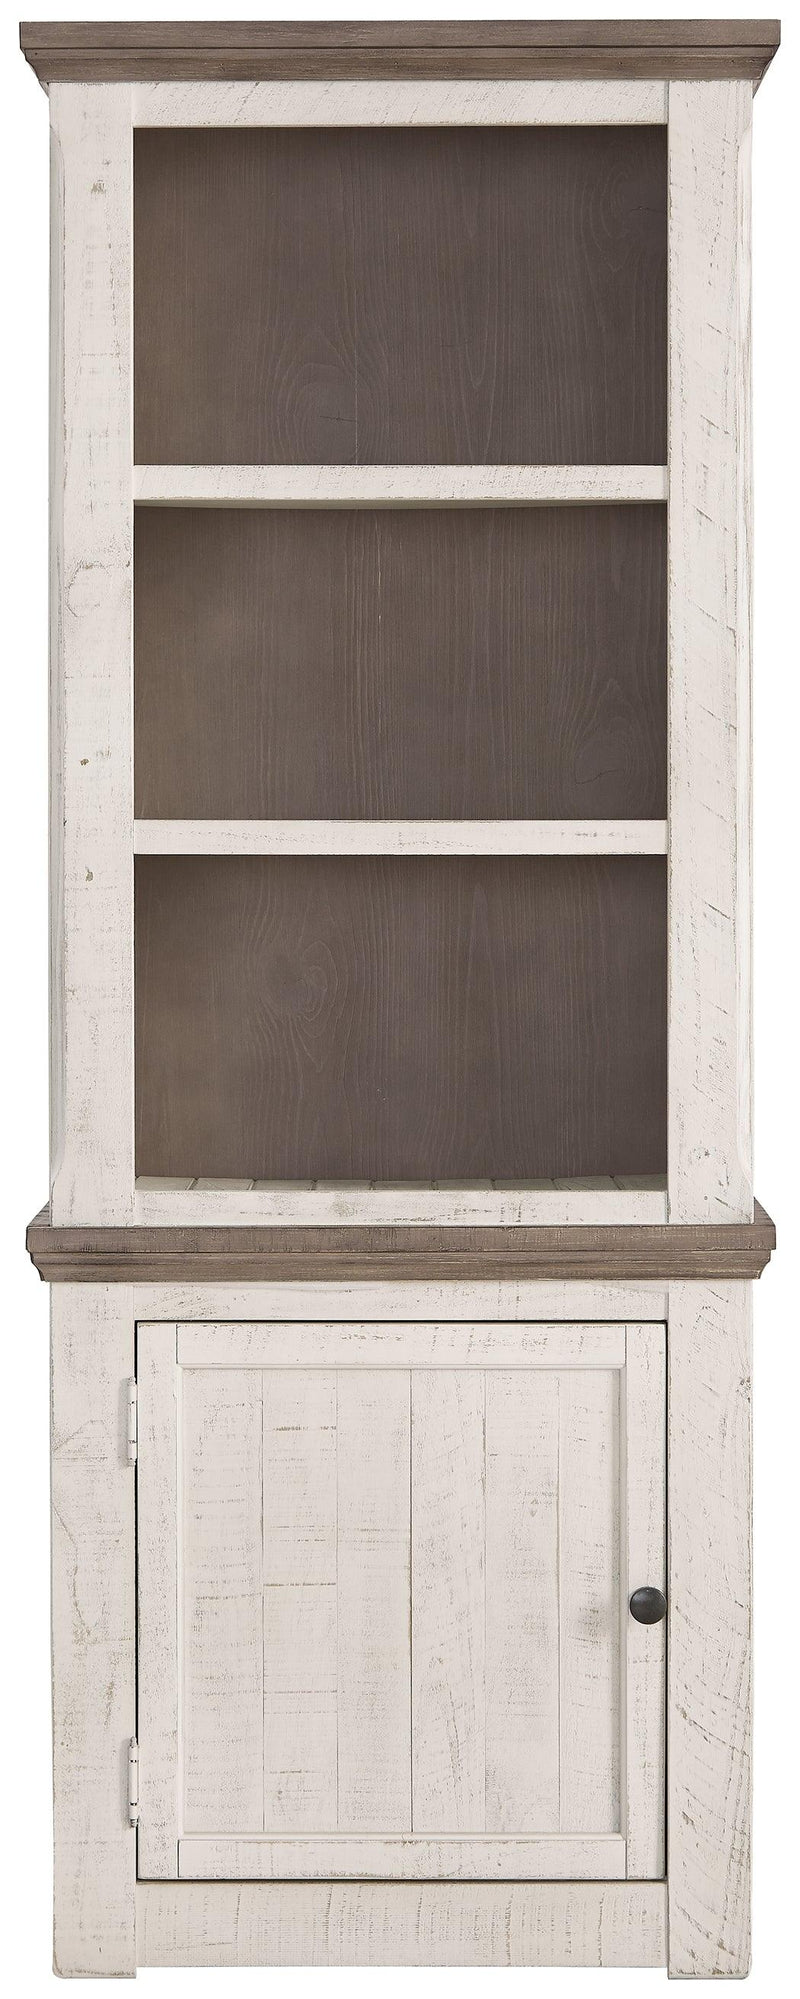 Havalance Two-tone Left Pier Cabinet - Ella Furniture